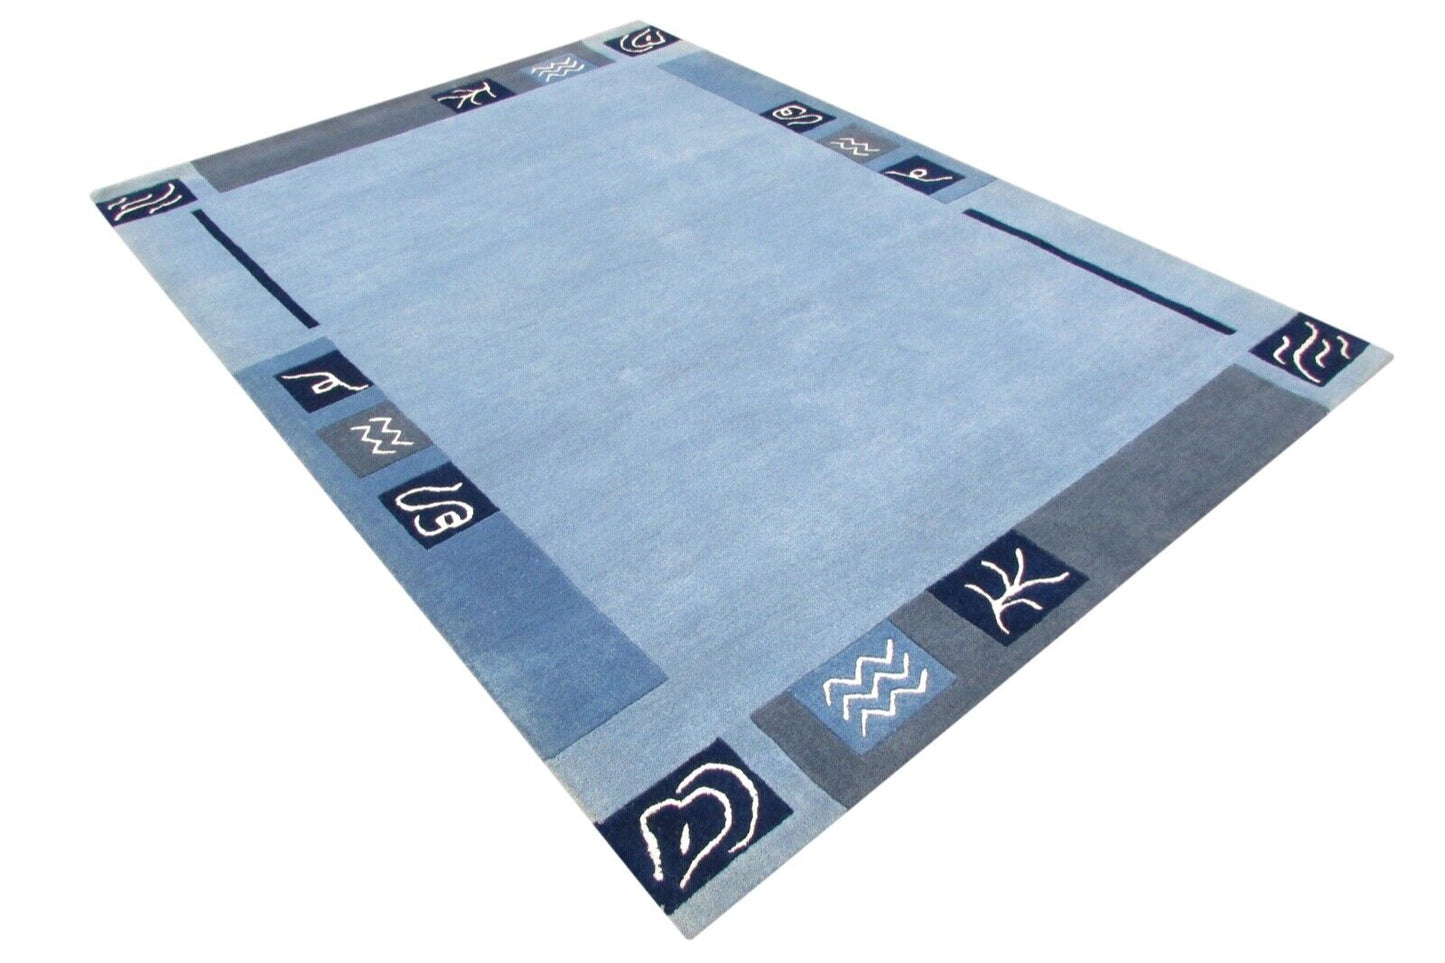 Aqua Blau petrol Wolle Teppich 170X240 cm Handarbeit Handgetuftet T842